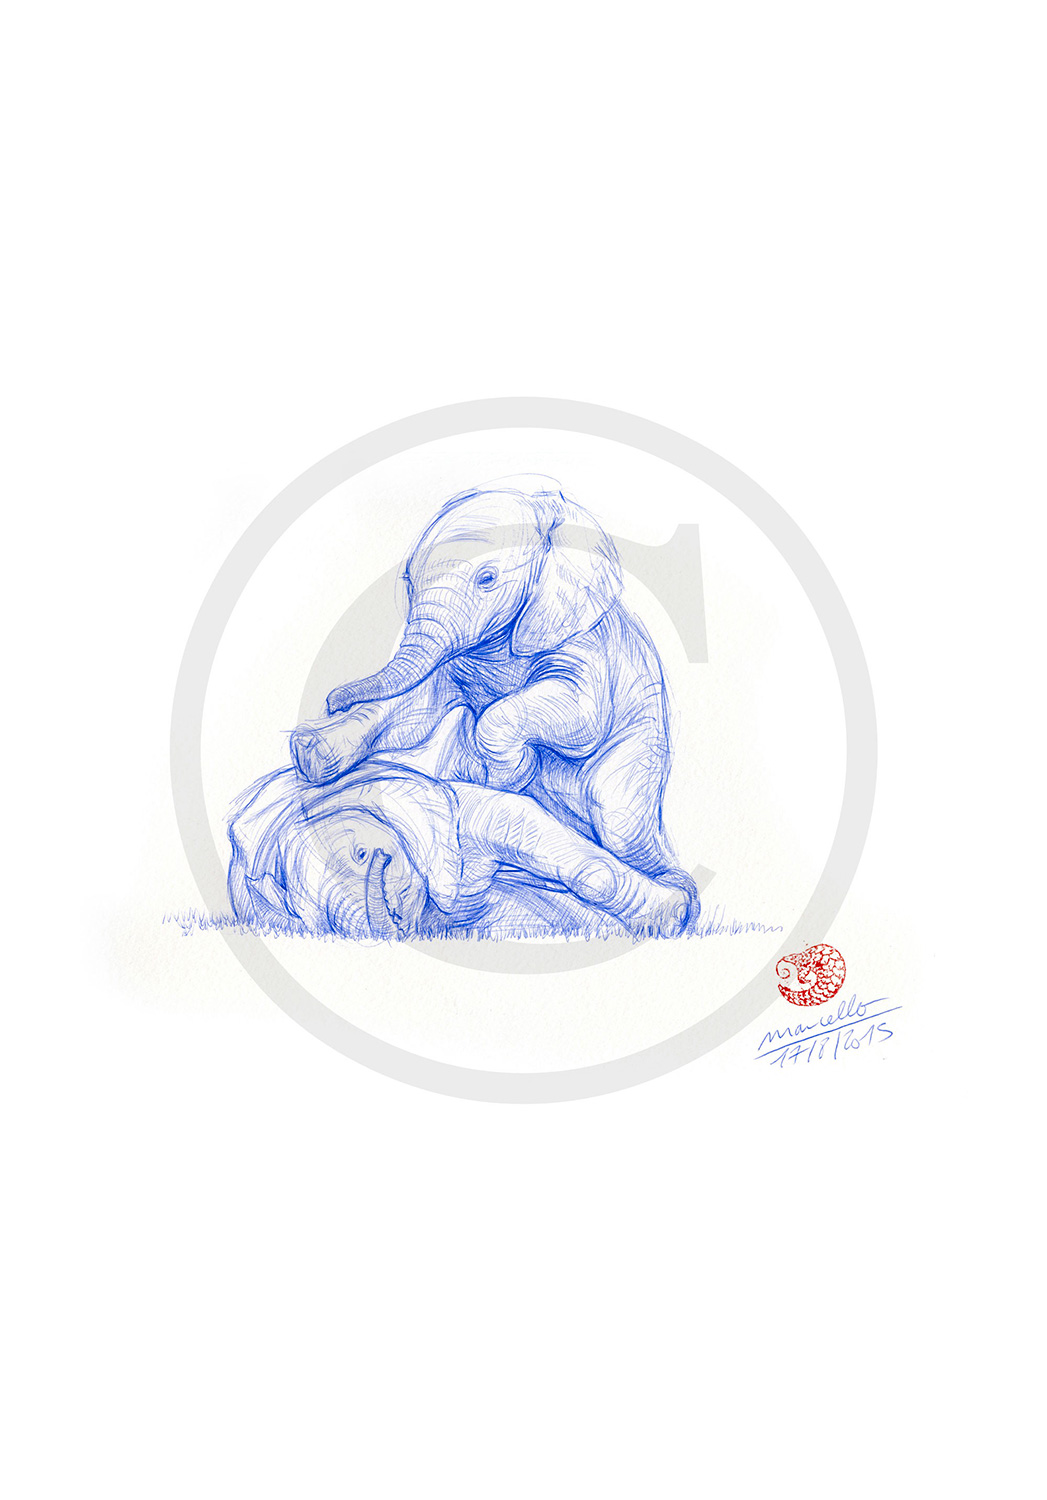 Marcello-art: Ballpoint pen drawing 316 - Baby elephant